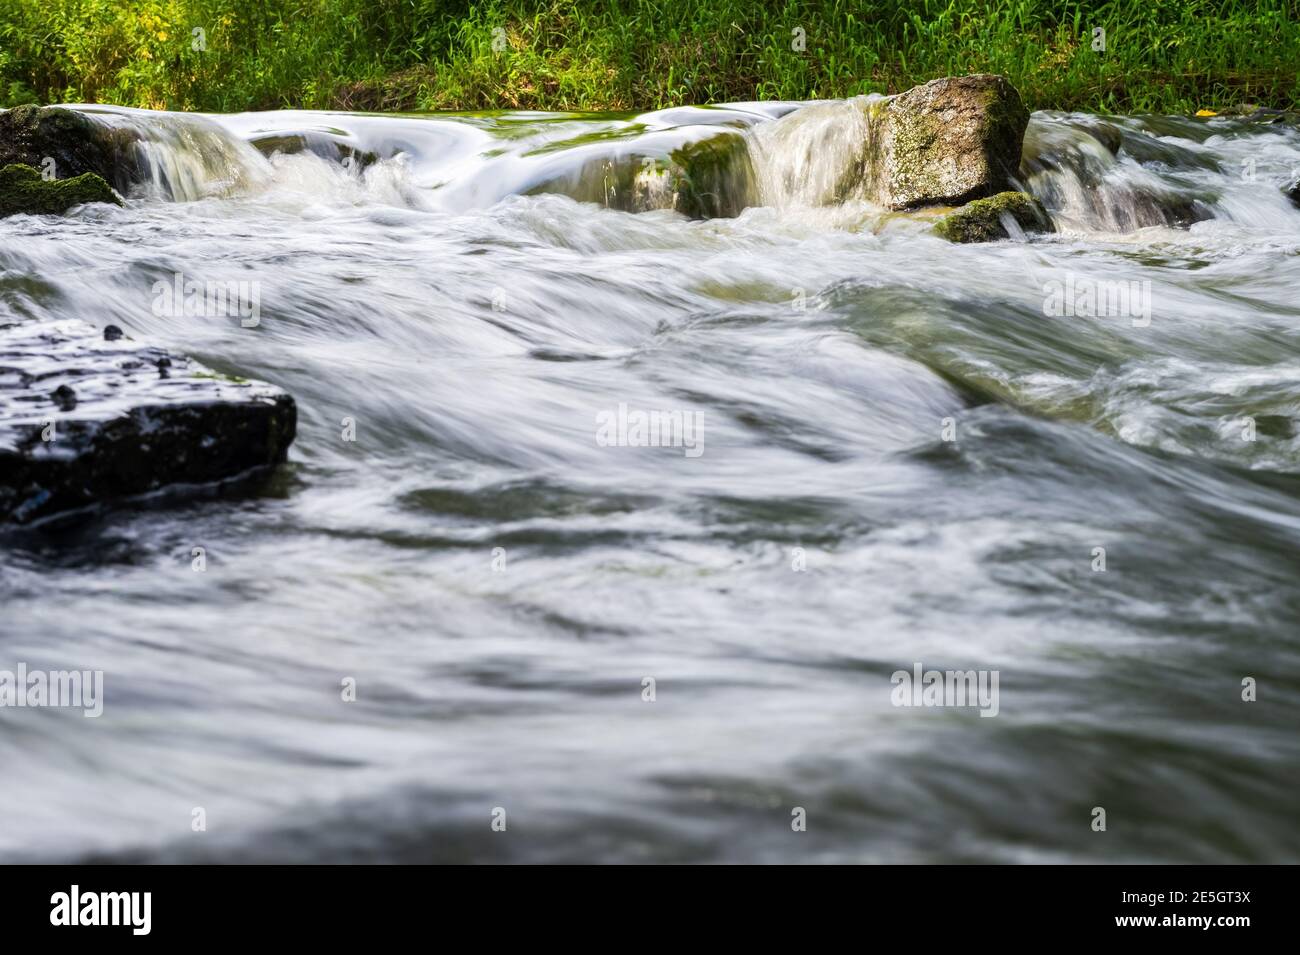 Fluss fließen über Felsen im Sommer Tag. Die Wellen des Flusses fließen. Entspannende Naturlandschaft Landschaft Stockfoto